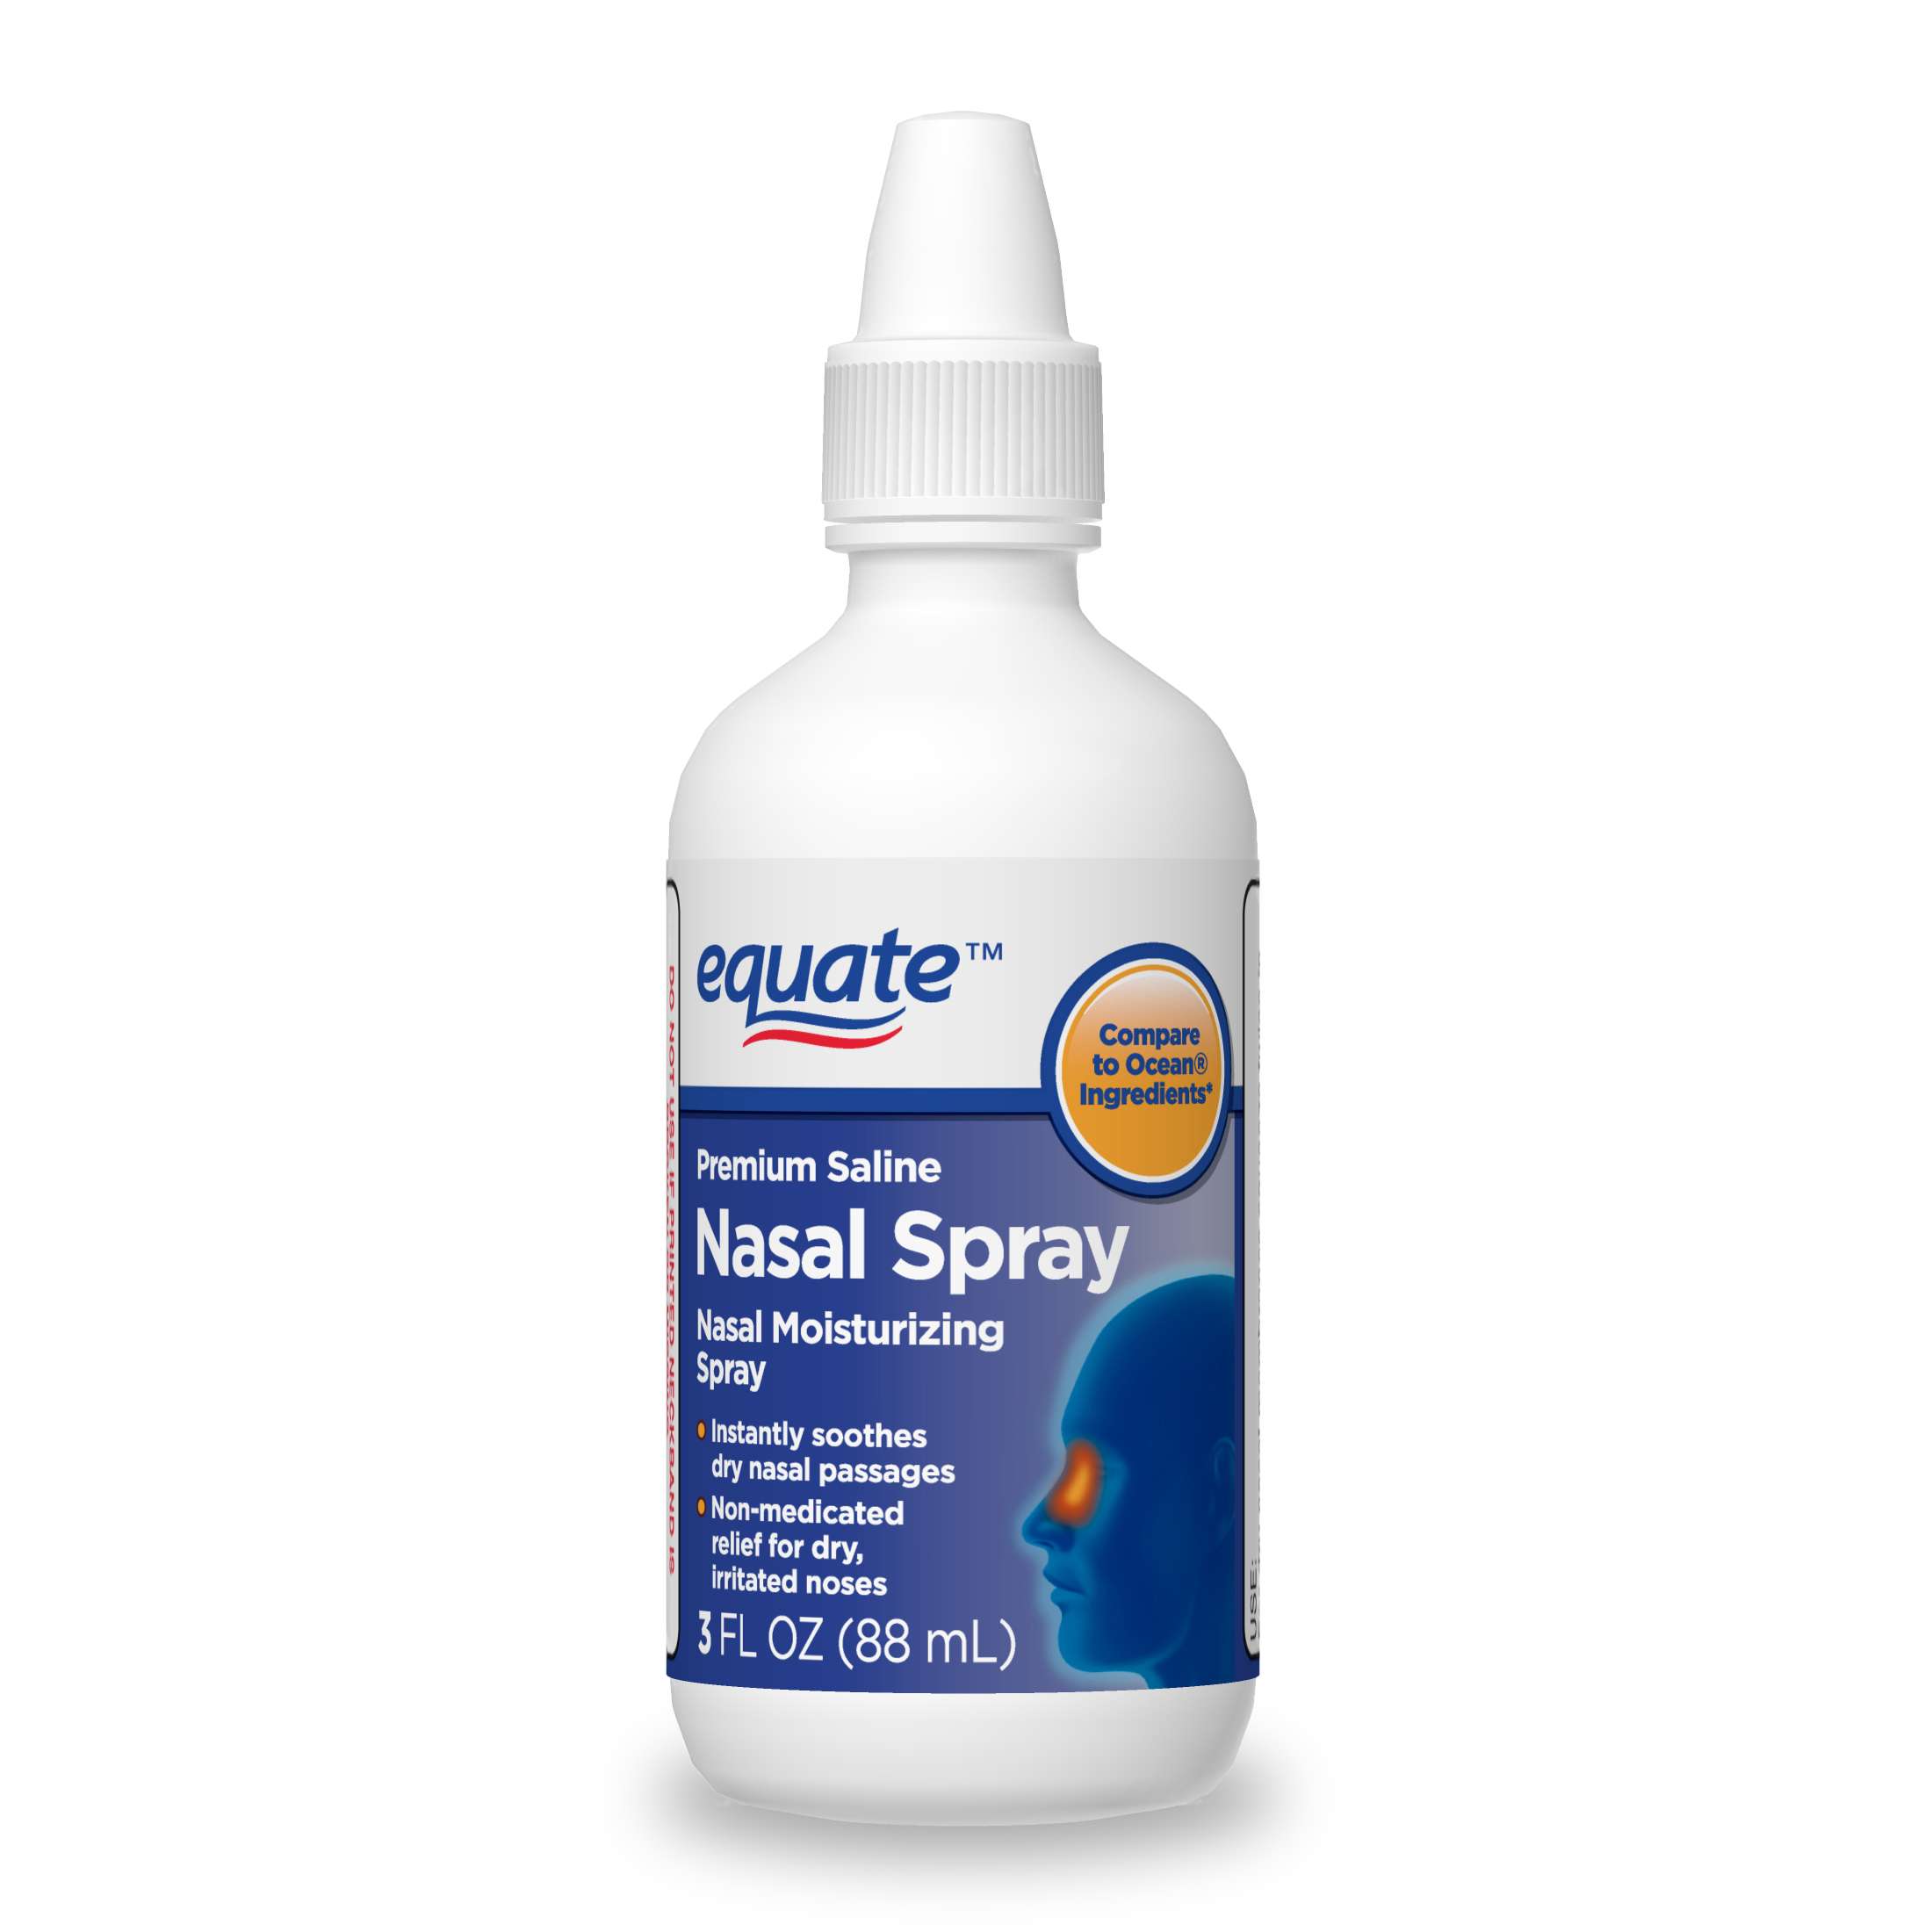 Equate Saline Nasal Spray, Sodium Chloride 0.65%, 3 fl oz ...